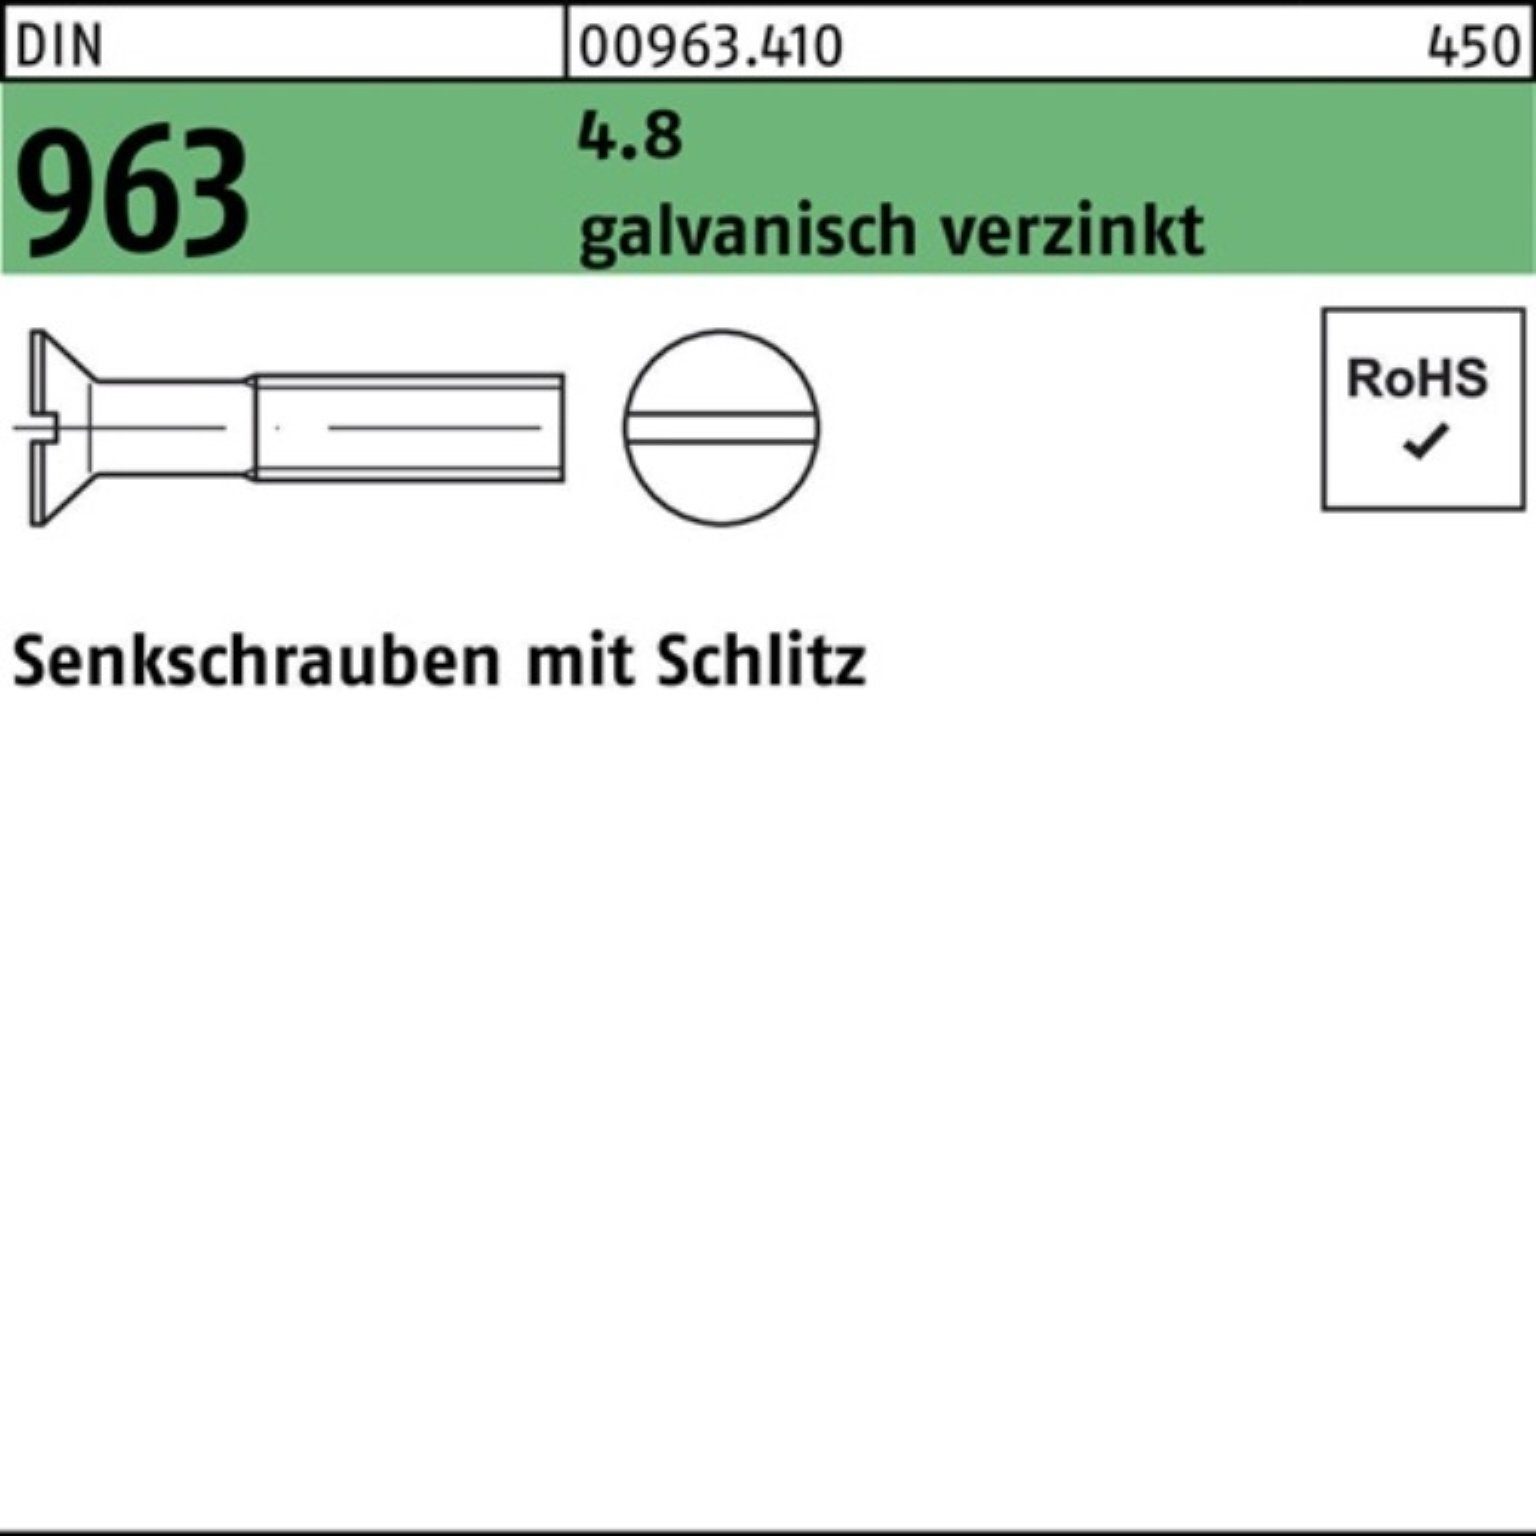 200 galv.verz. M3x Schlitz 4.8 20 Reyher Stü Senkschraube Senkschraube Pack 963 DIN 200er